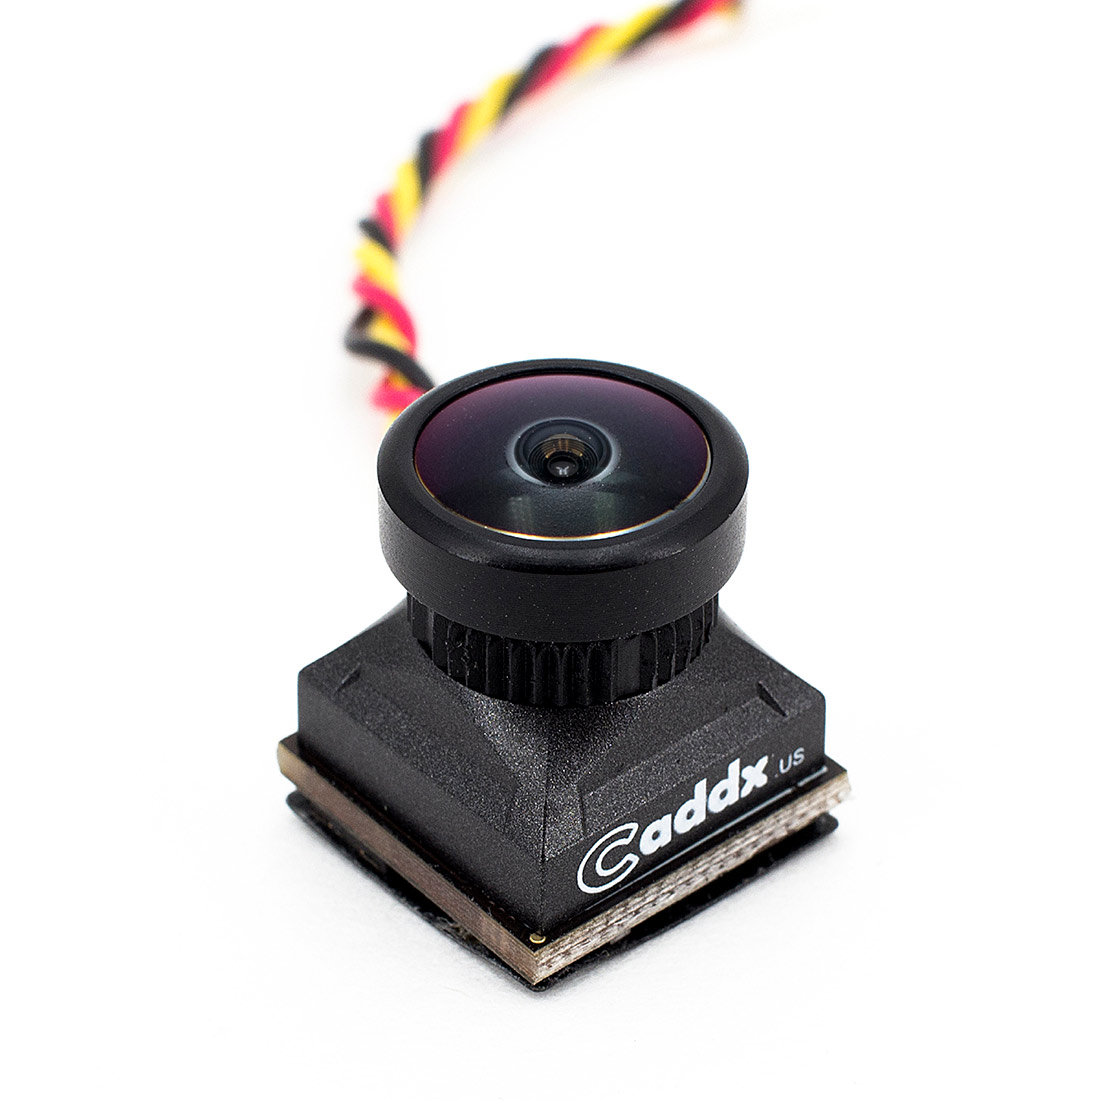 Caddx Turbo EOS2 1/3" CMOS 1200TVL 2.1mm Lens 4:3 NTSC FPV Camera For RC Drone